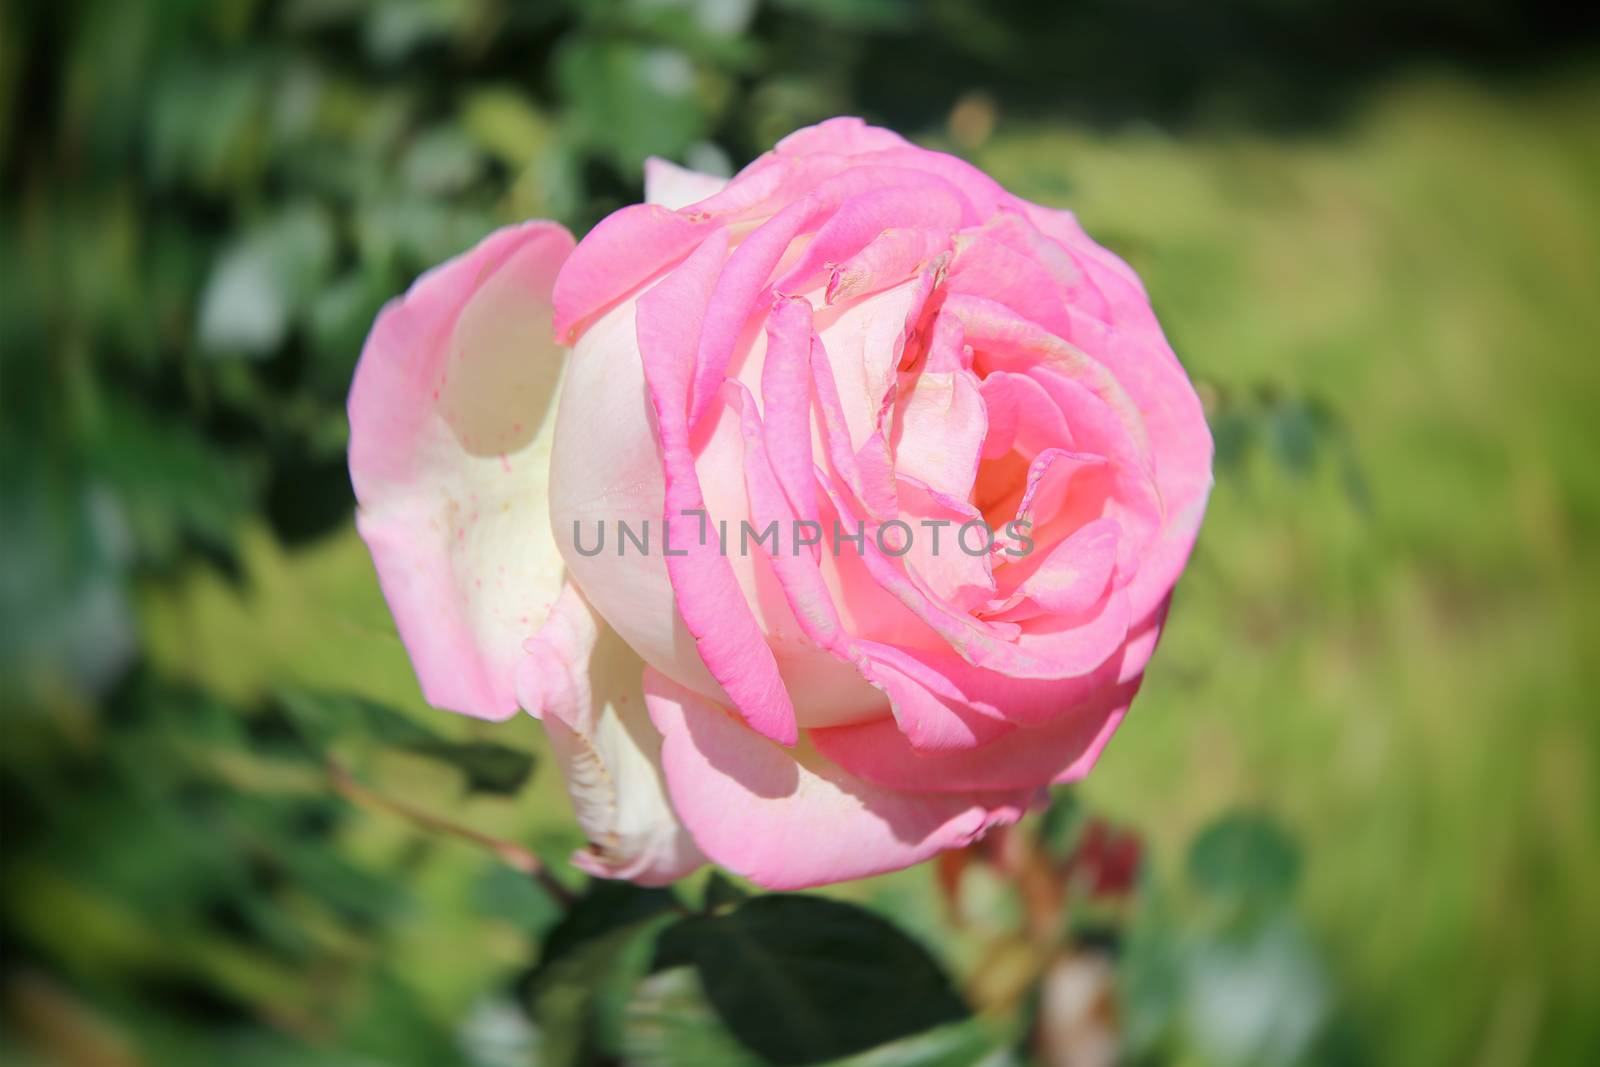 Beautiful Pink Rose in a Garden by bensib